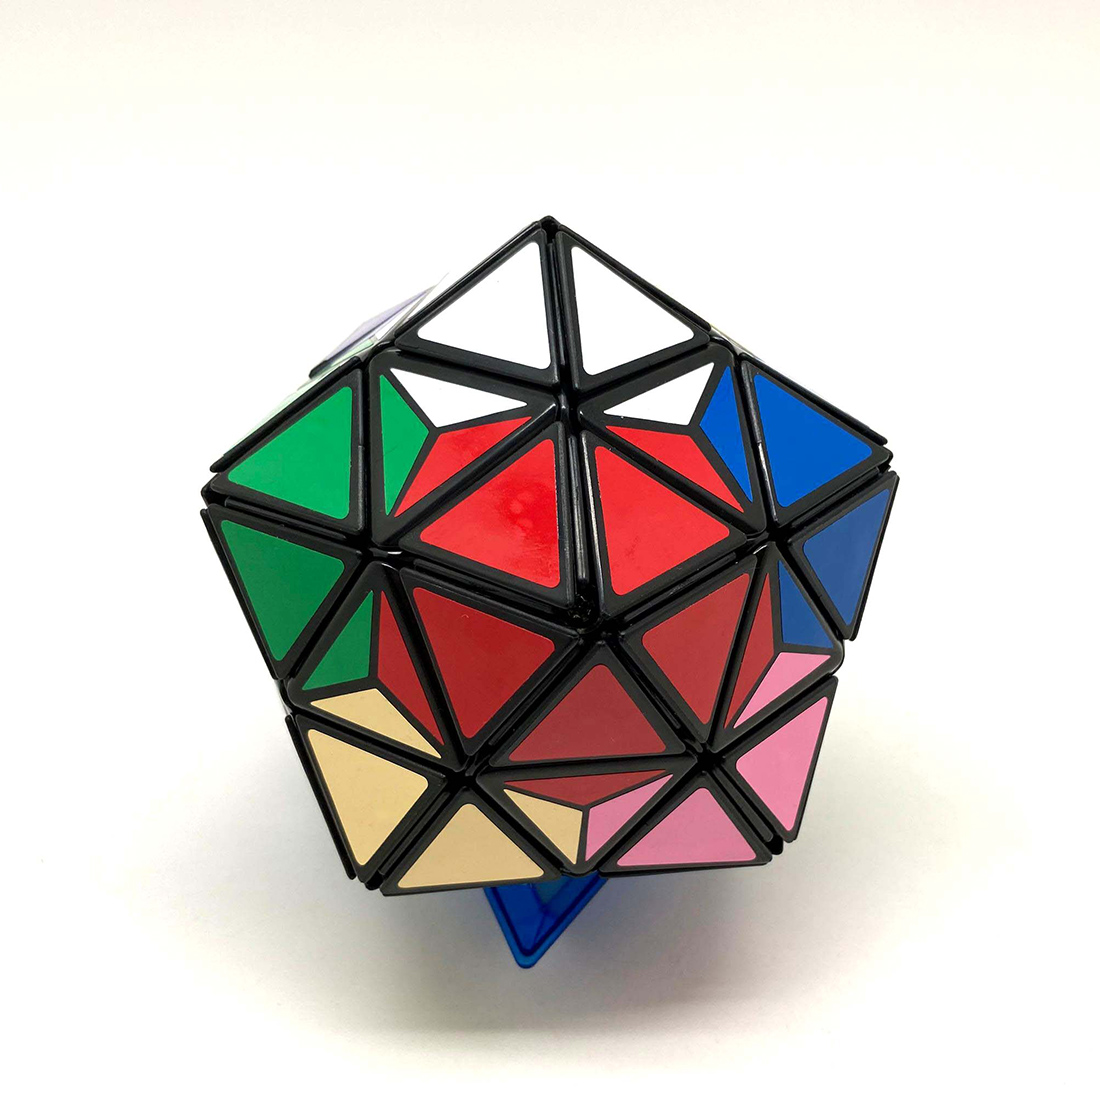 Calvin's Icosahedron Magic Cube (Standard Black Body)